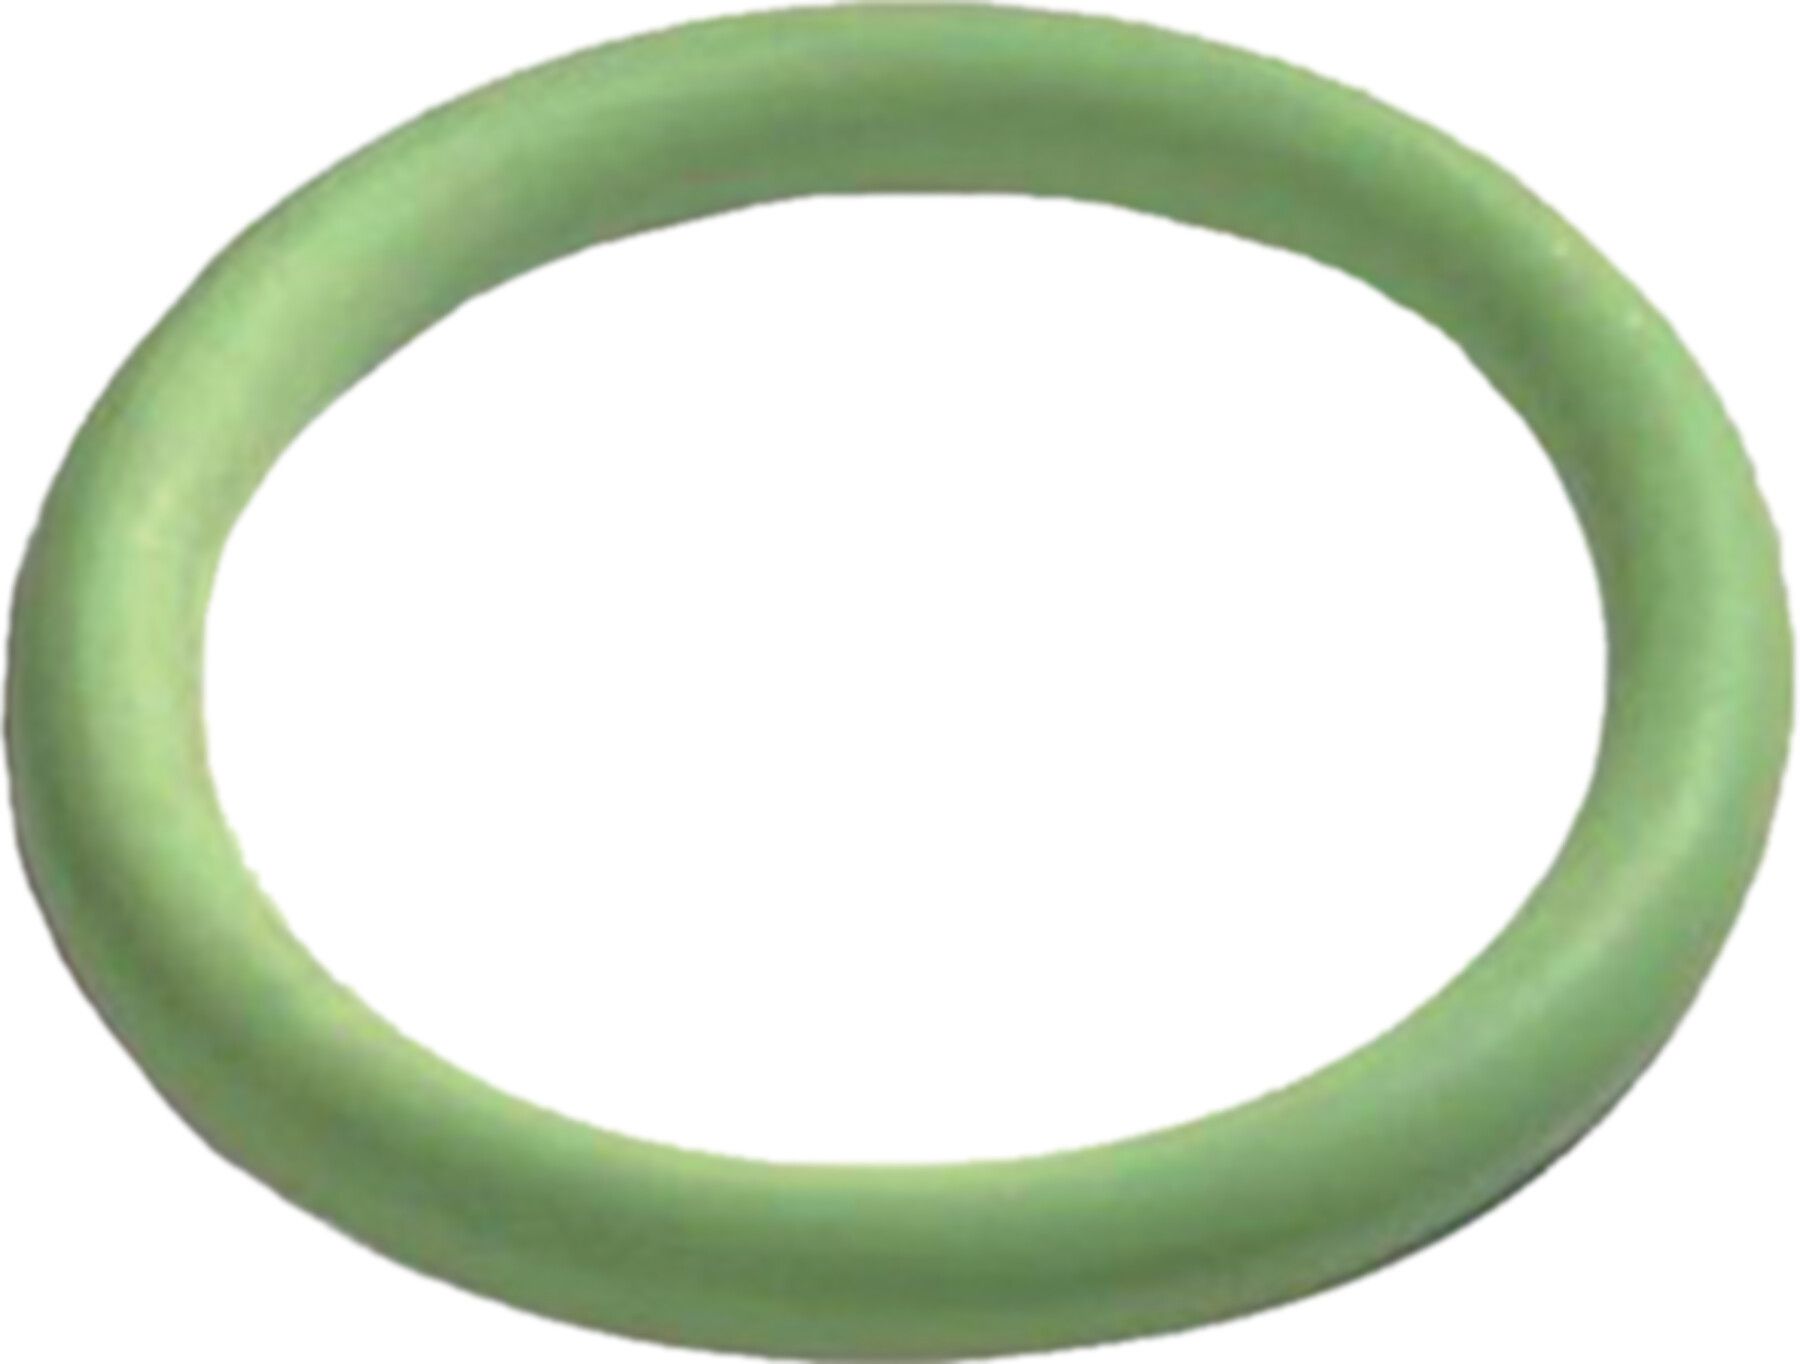 O-Ring FKM grün 22 mm 002851 - Eurotubi Press-Formstücke Heizung